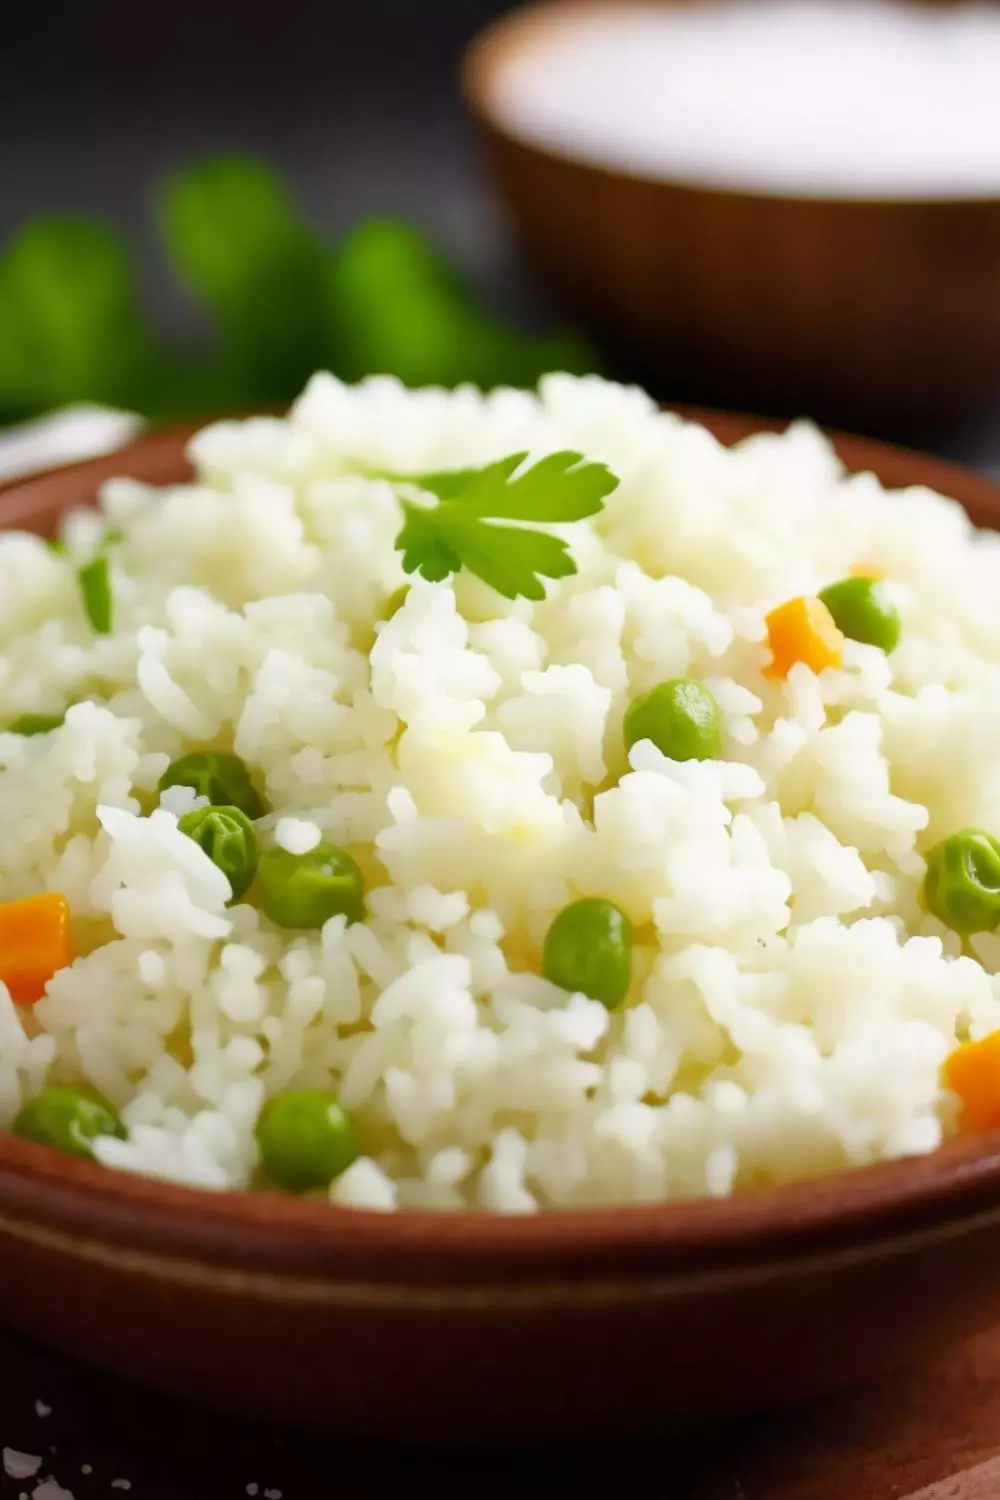 costco cauliflower rice